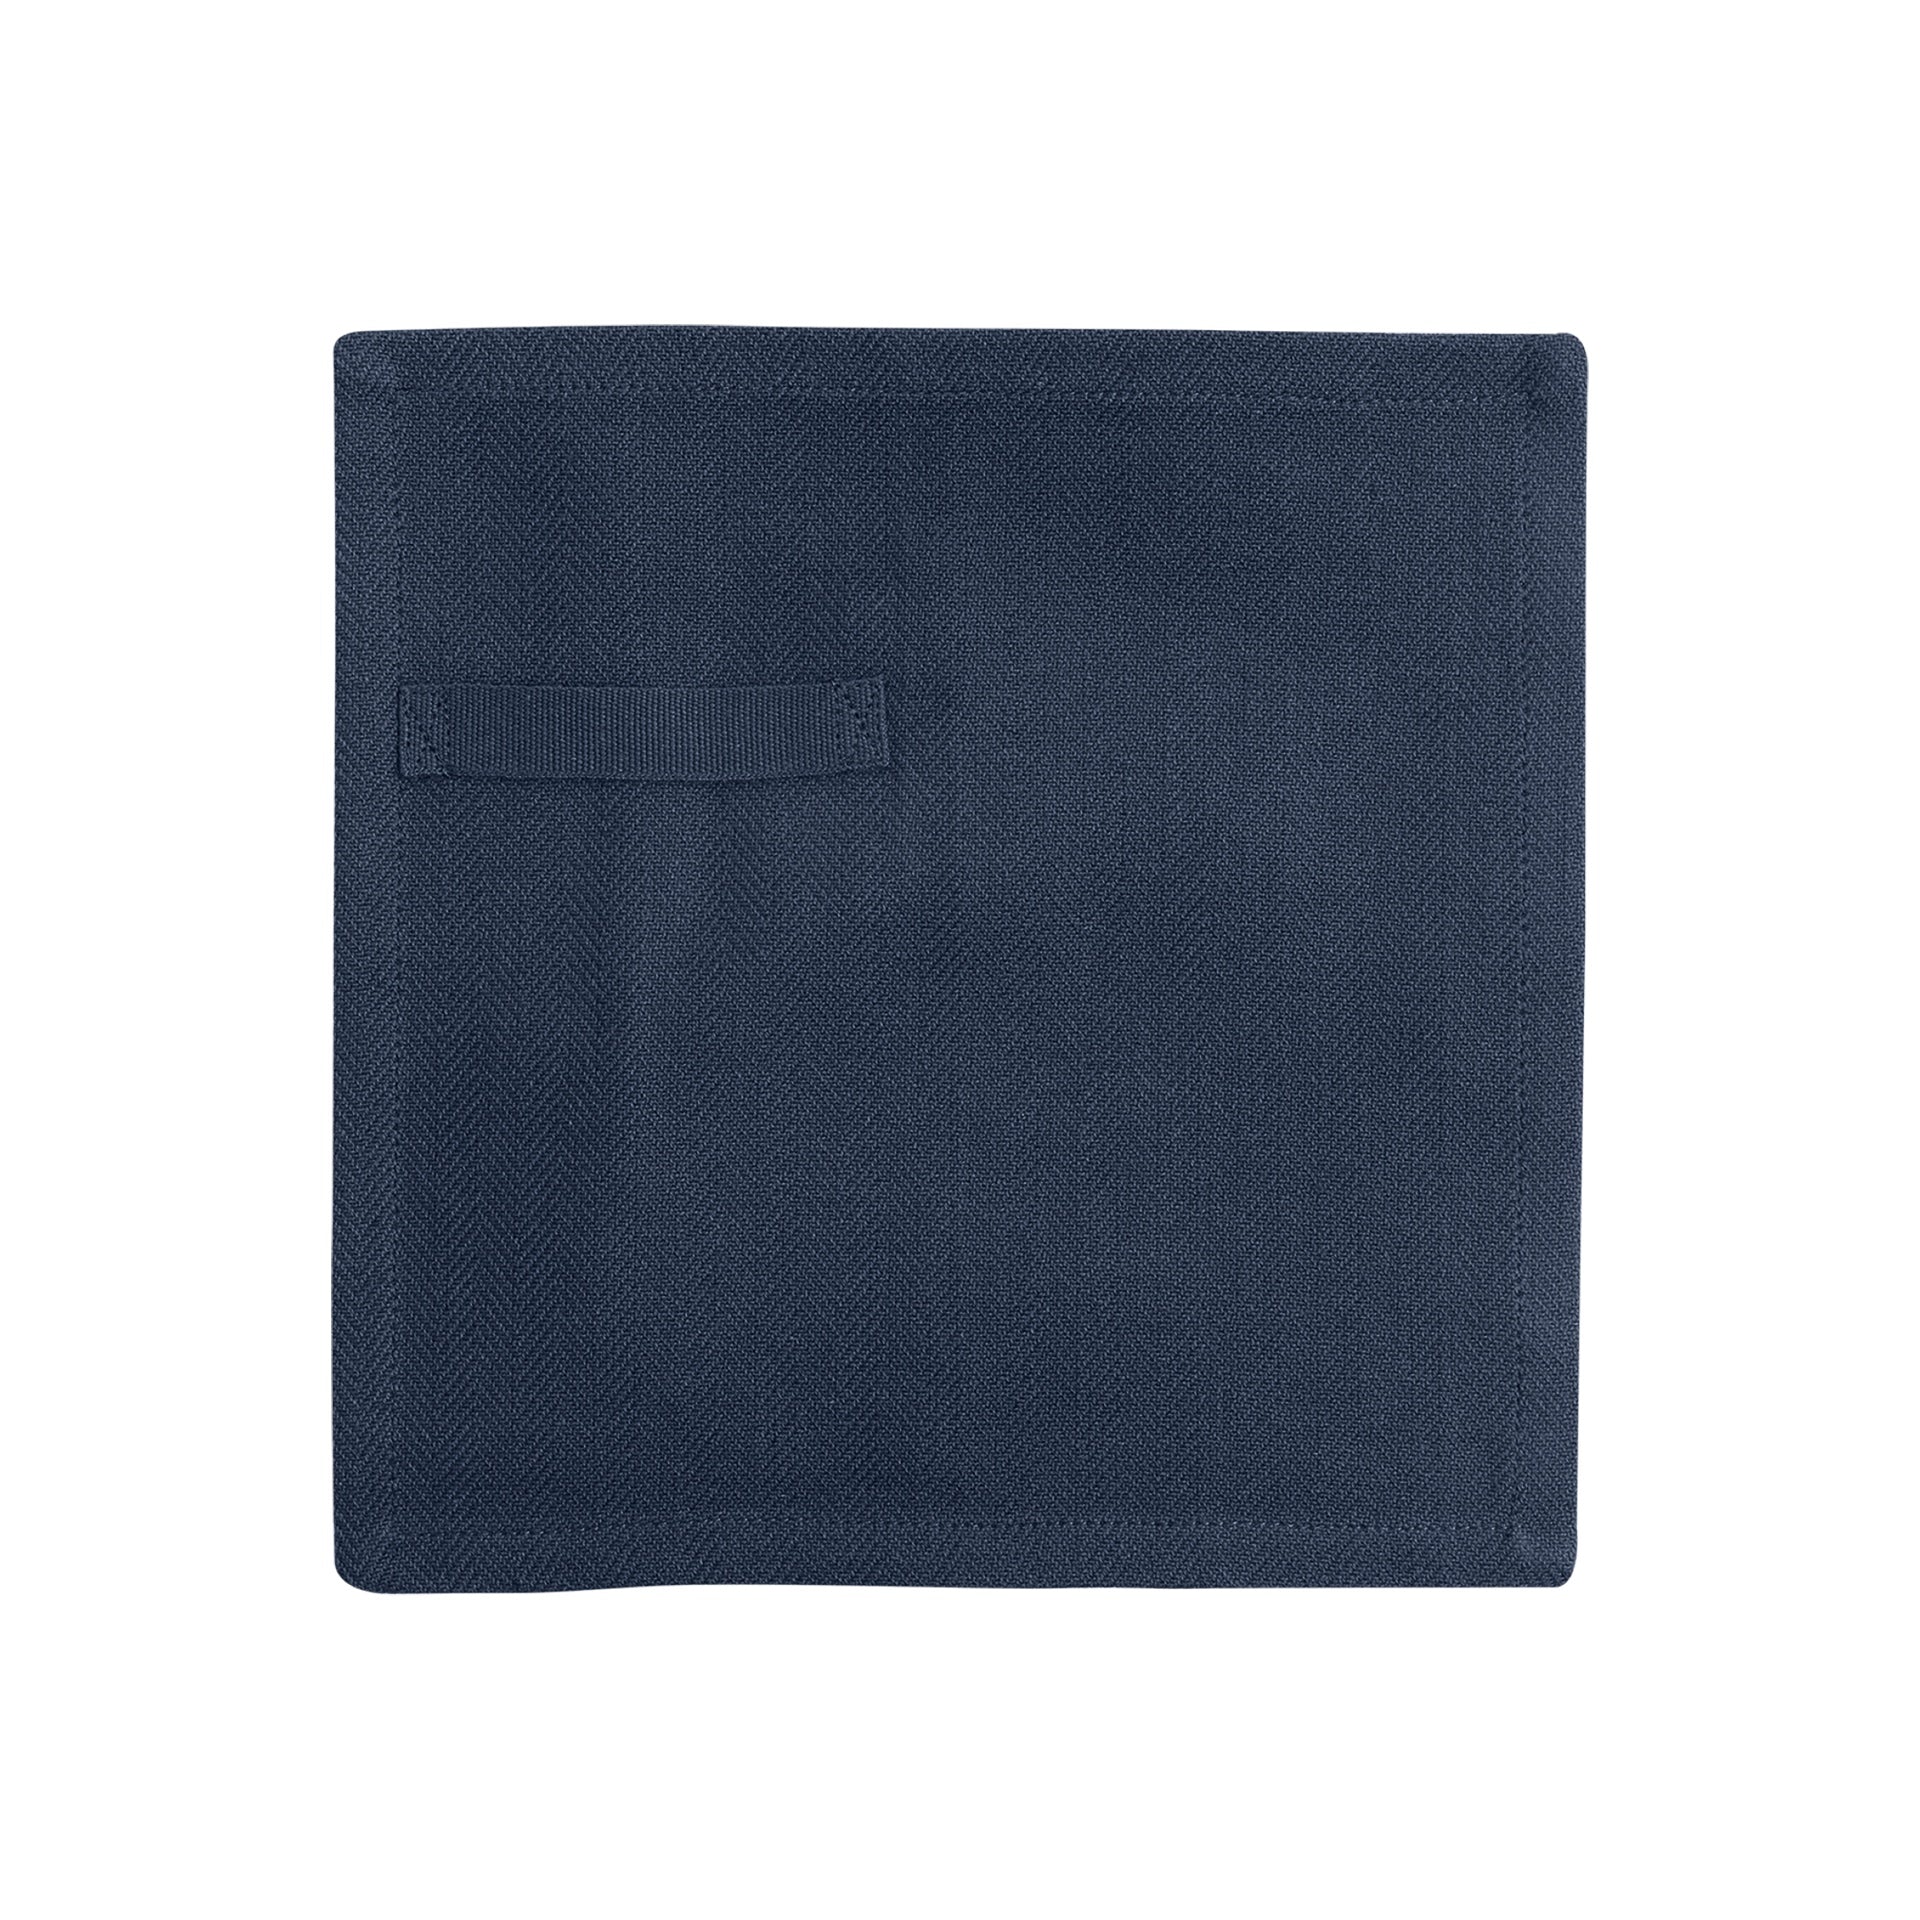 Everyday napkin Dark blue fra The Organic Company hos Oliviers & Co